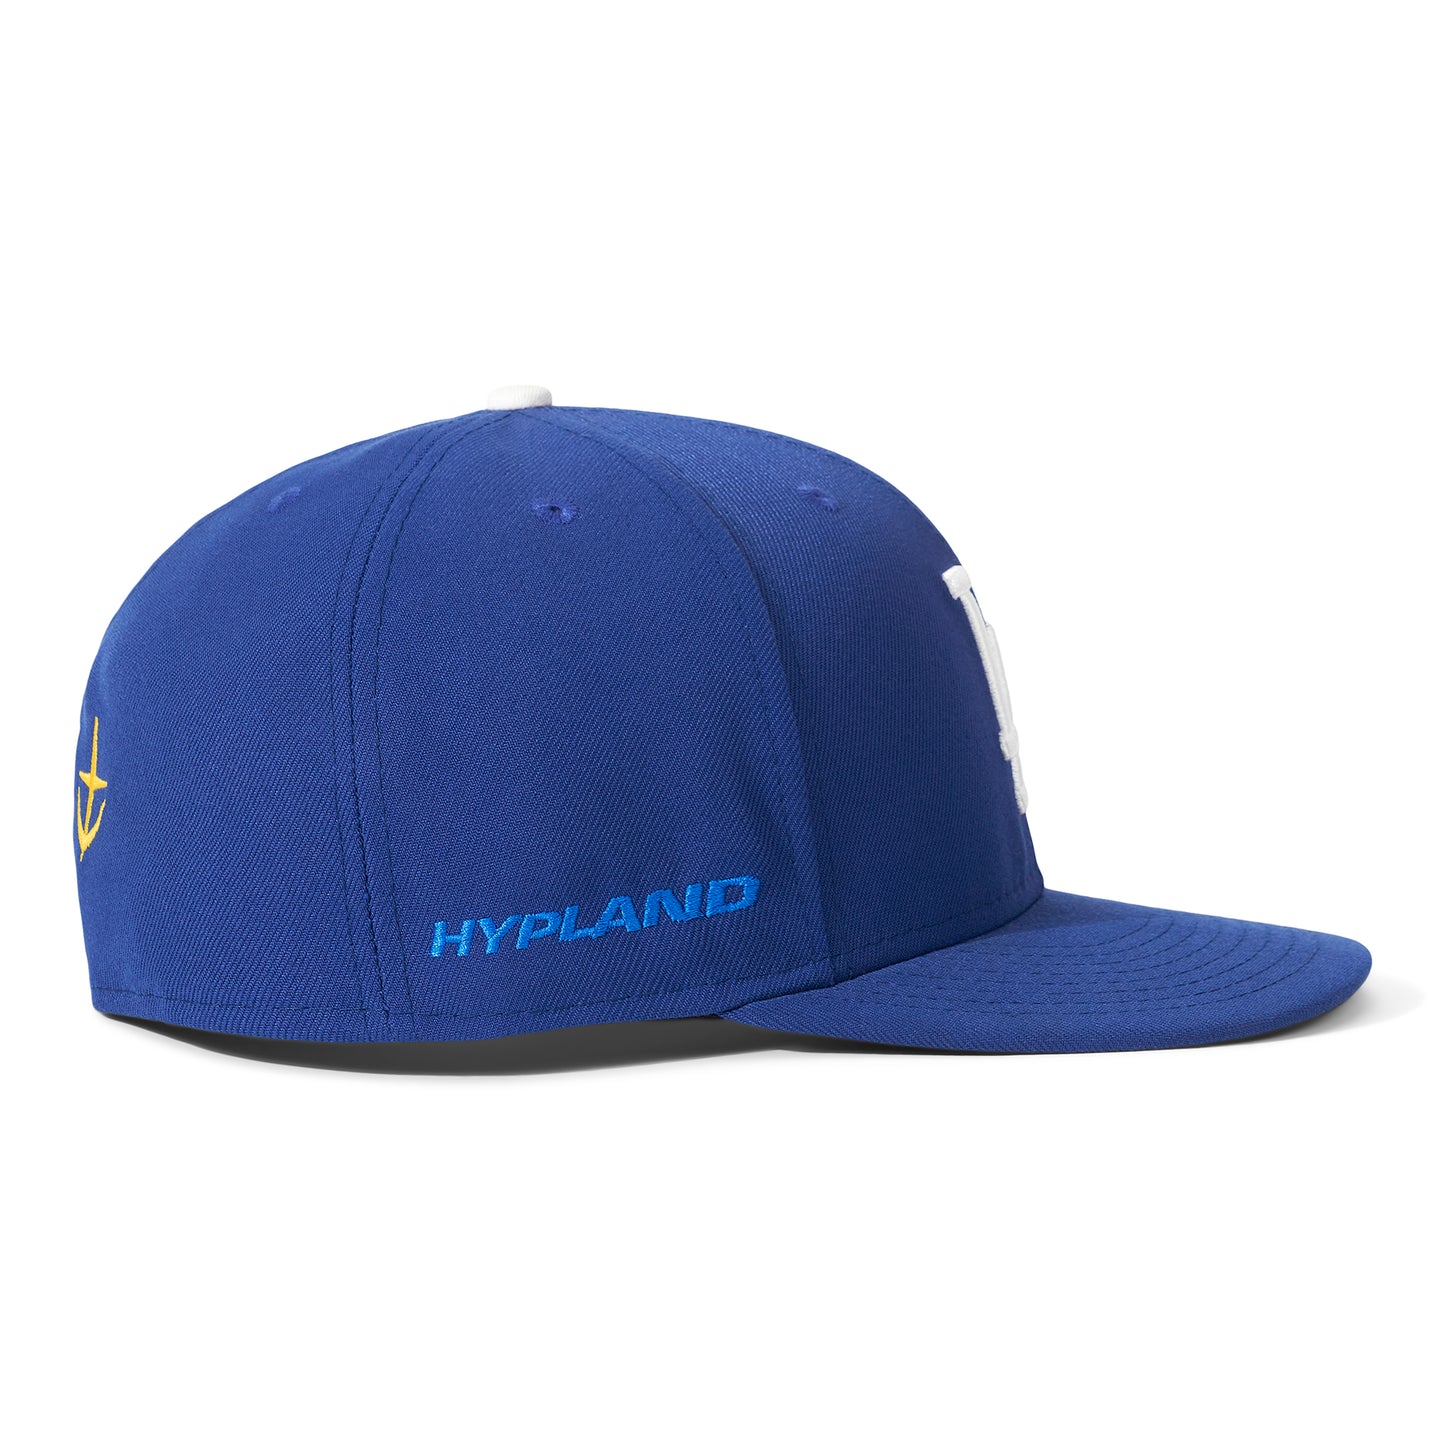 GUNDAM RX78 LA FITTED HAT (BLUE)